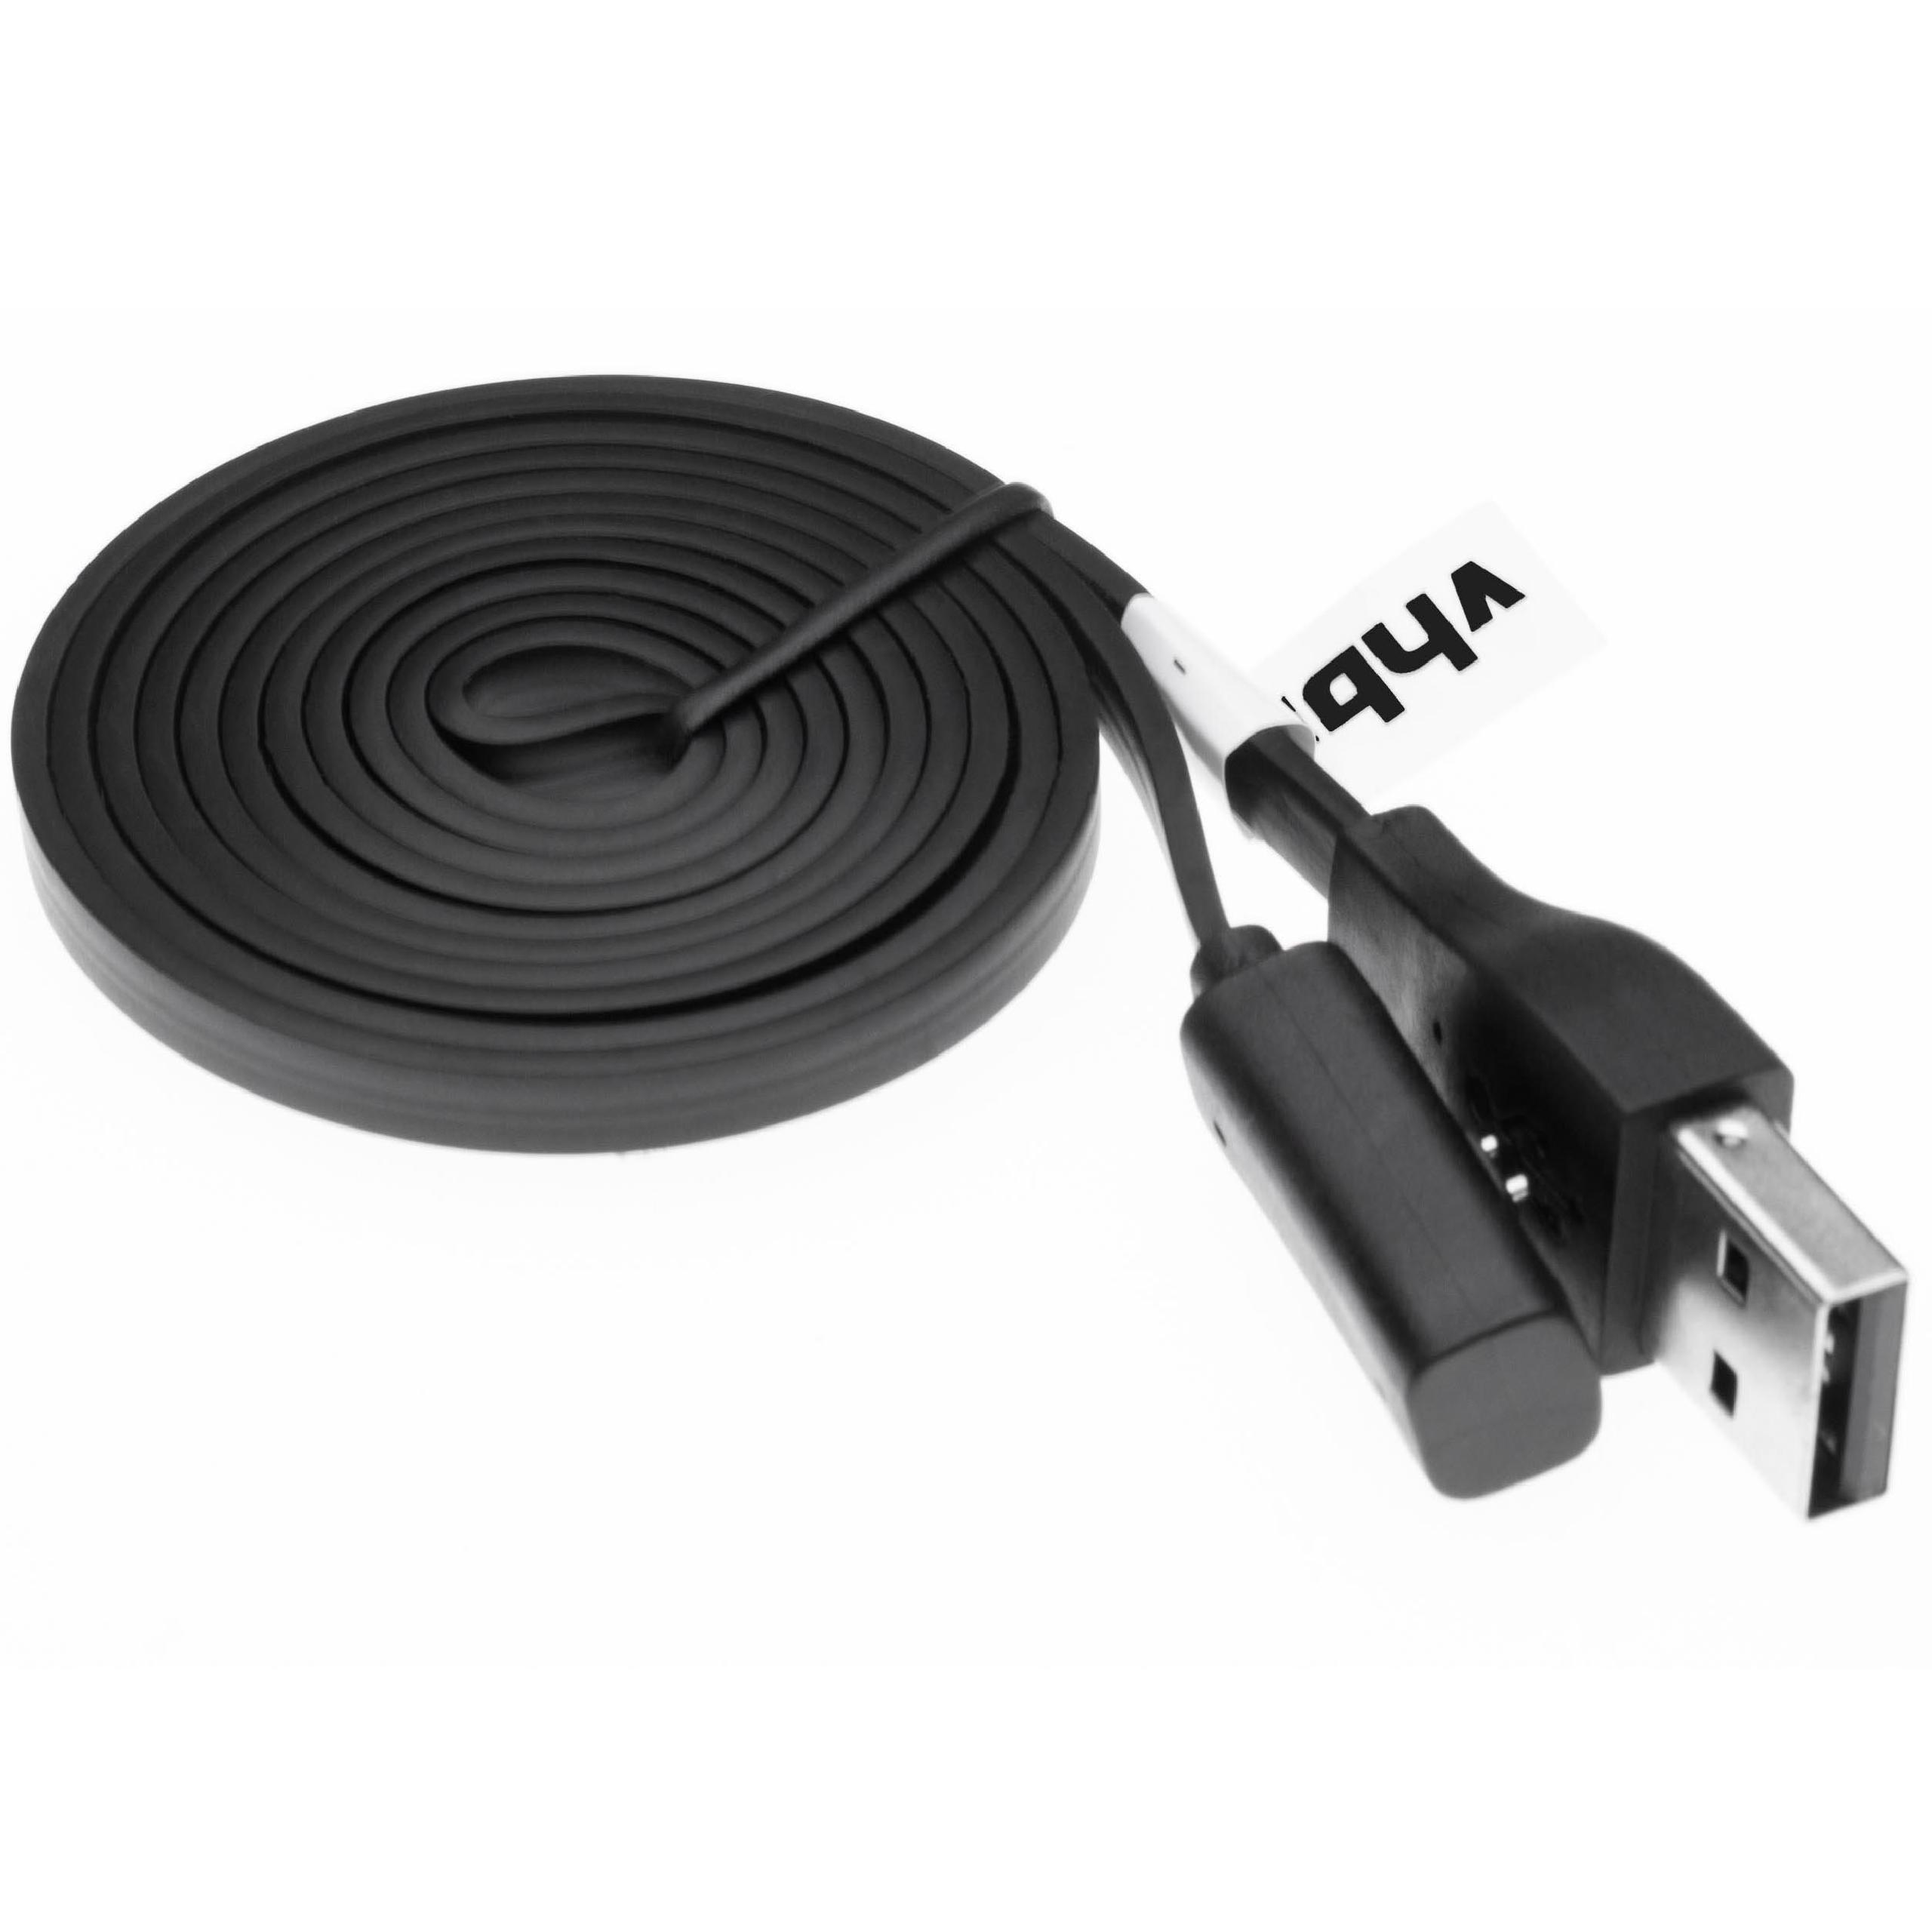 Cable de carga USB para smartwatch Pebble Time Steel - negro 100 cm